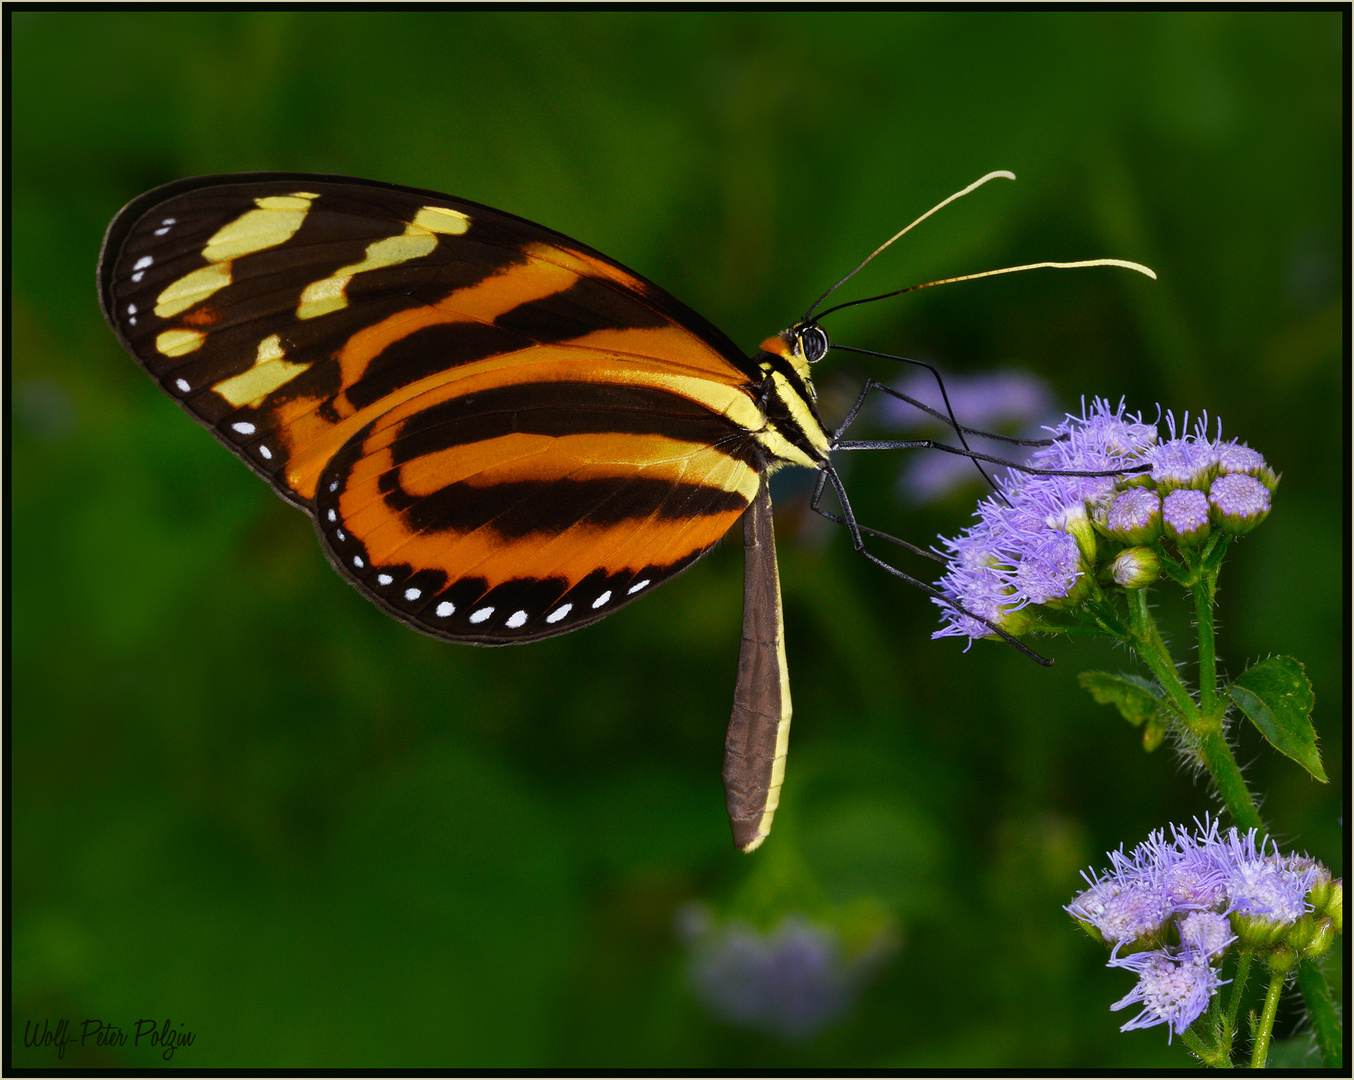 Imitiert Lichtflecken: Tigerflügel Melanaea lilis (Costa Rica)